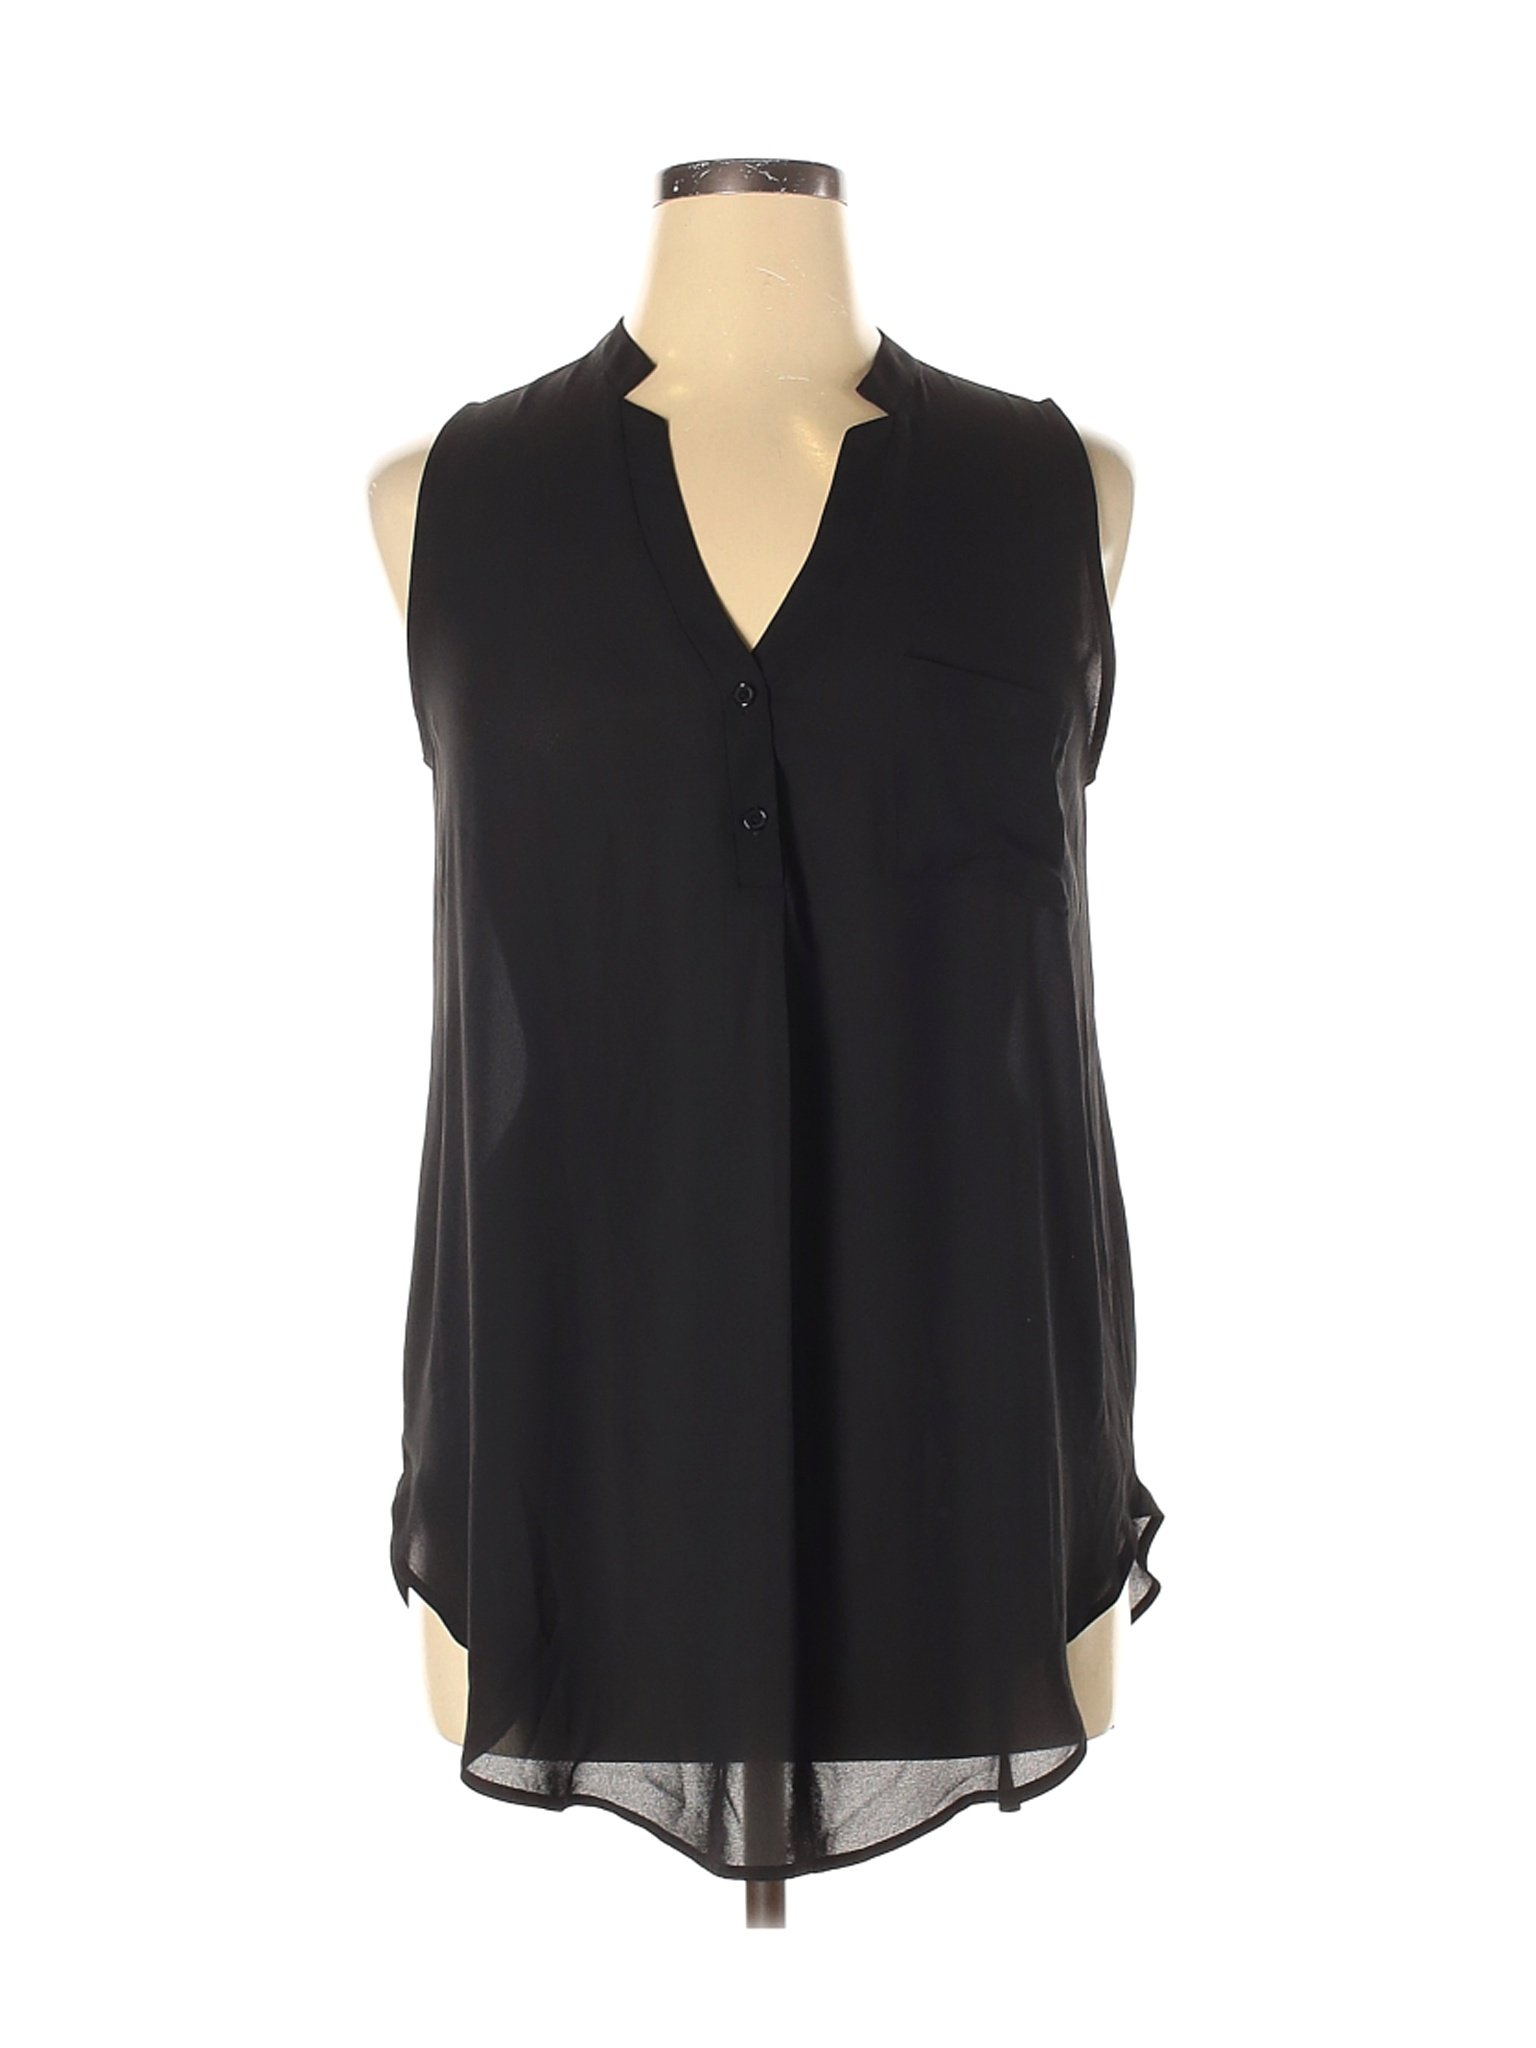 Lush Women Black Sleeveless Blouse XL | eBay